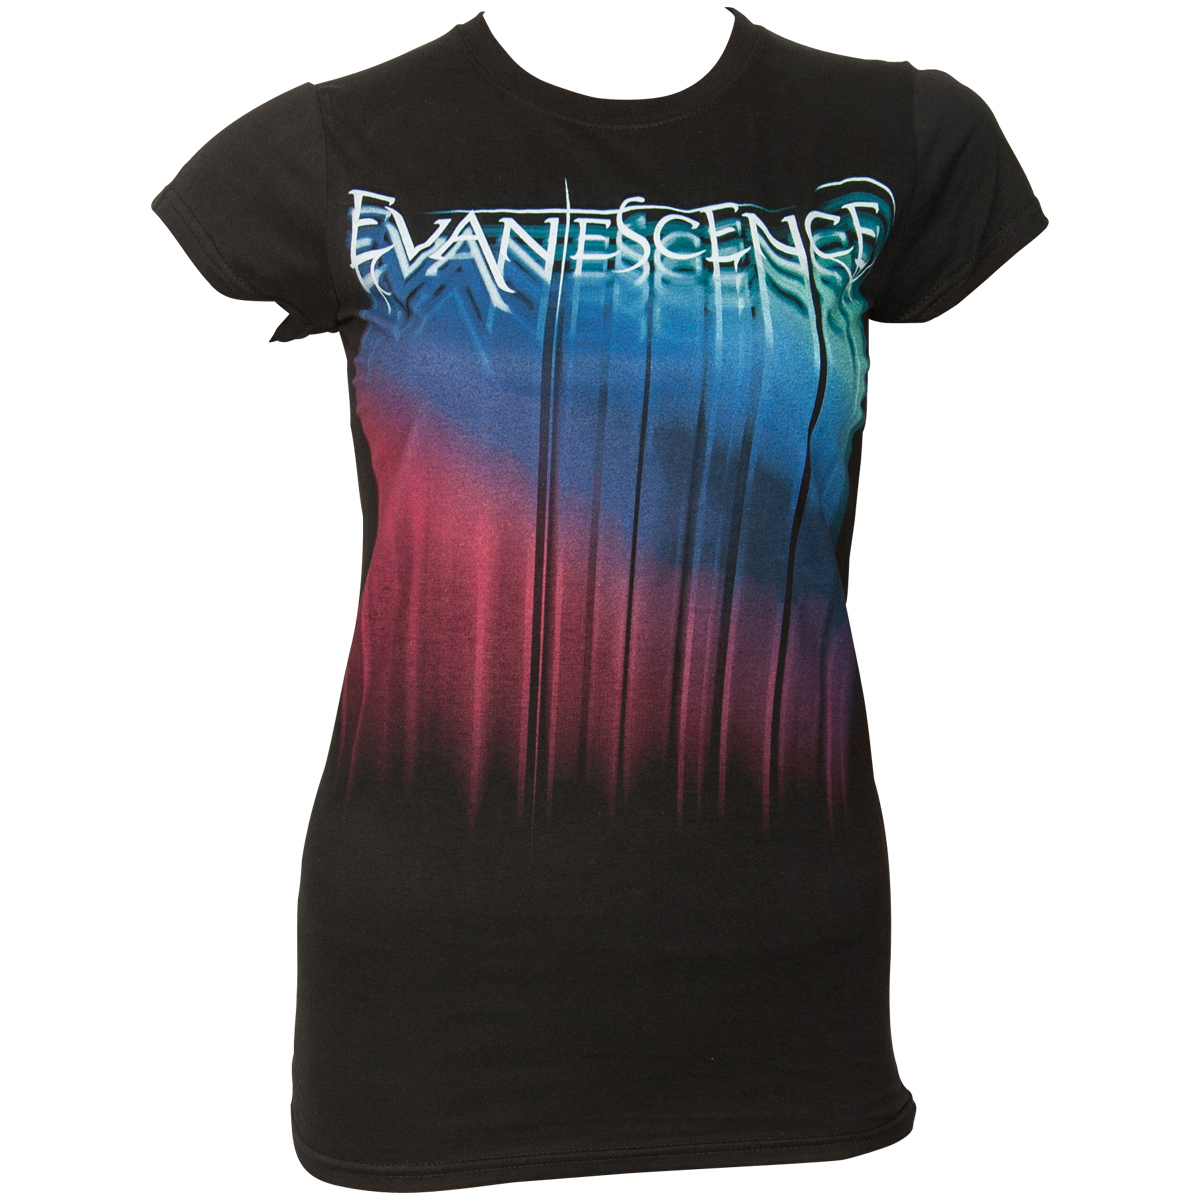 Evanescence - Damen T-Shirt Tour Logo - schwarz